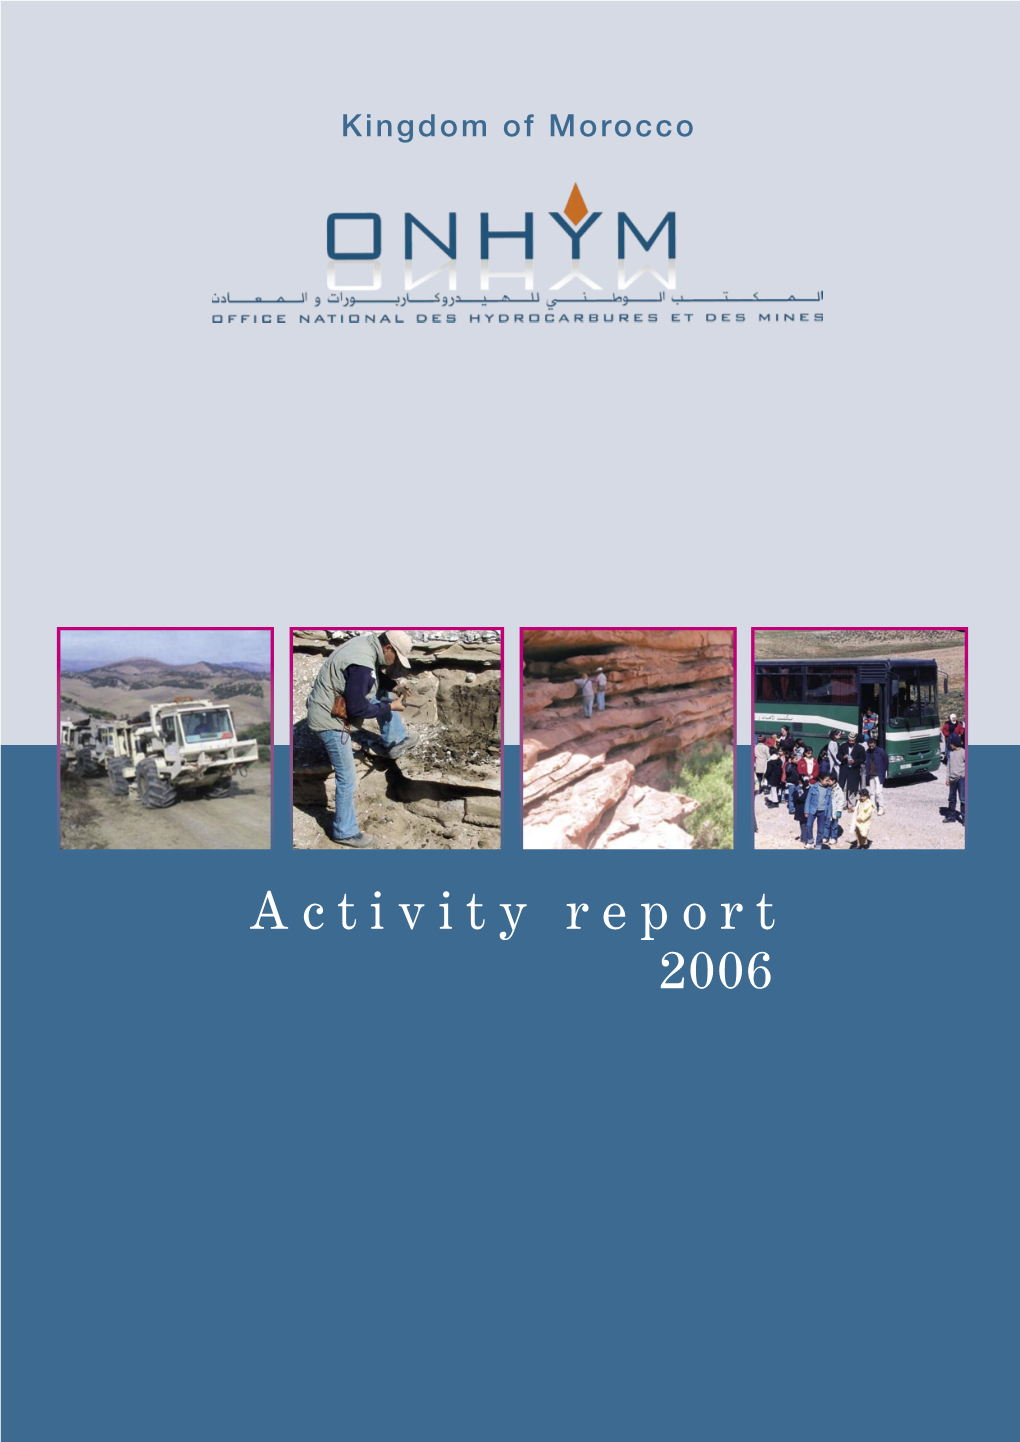 Annual Repport 2006 (PDF)